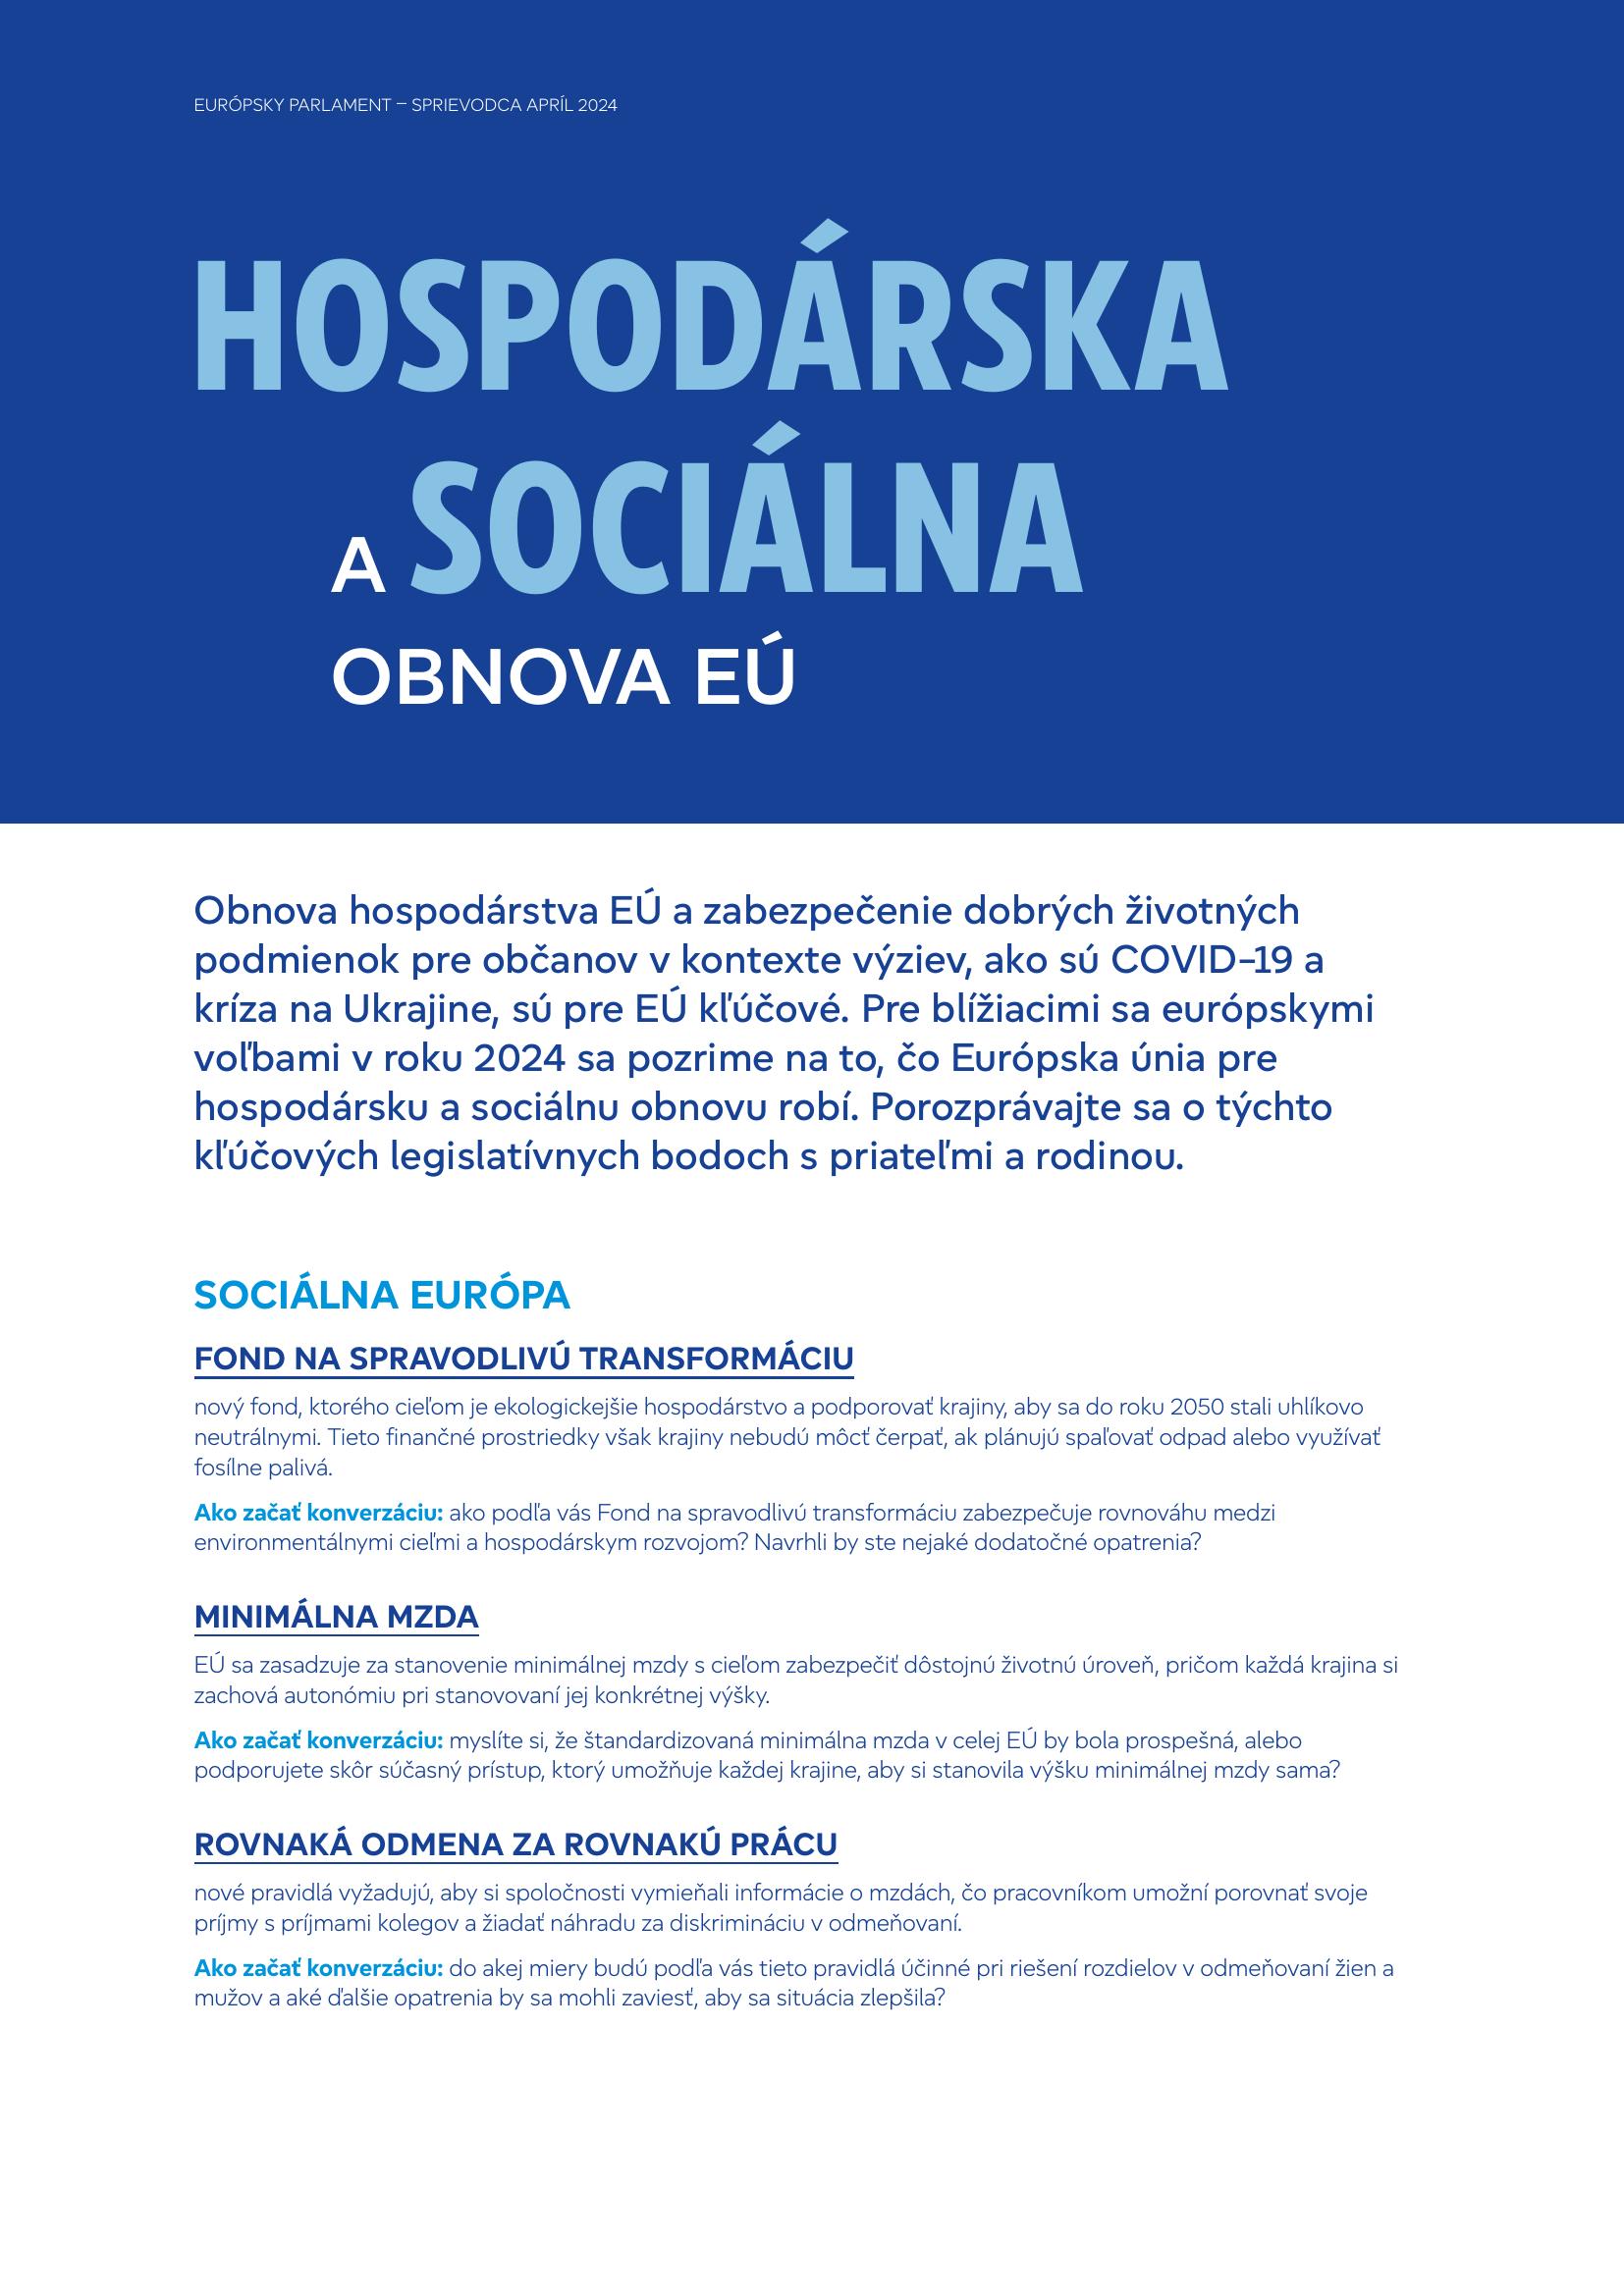 Together.eu_one-pager_economic_social_web.pdf